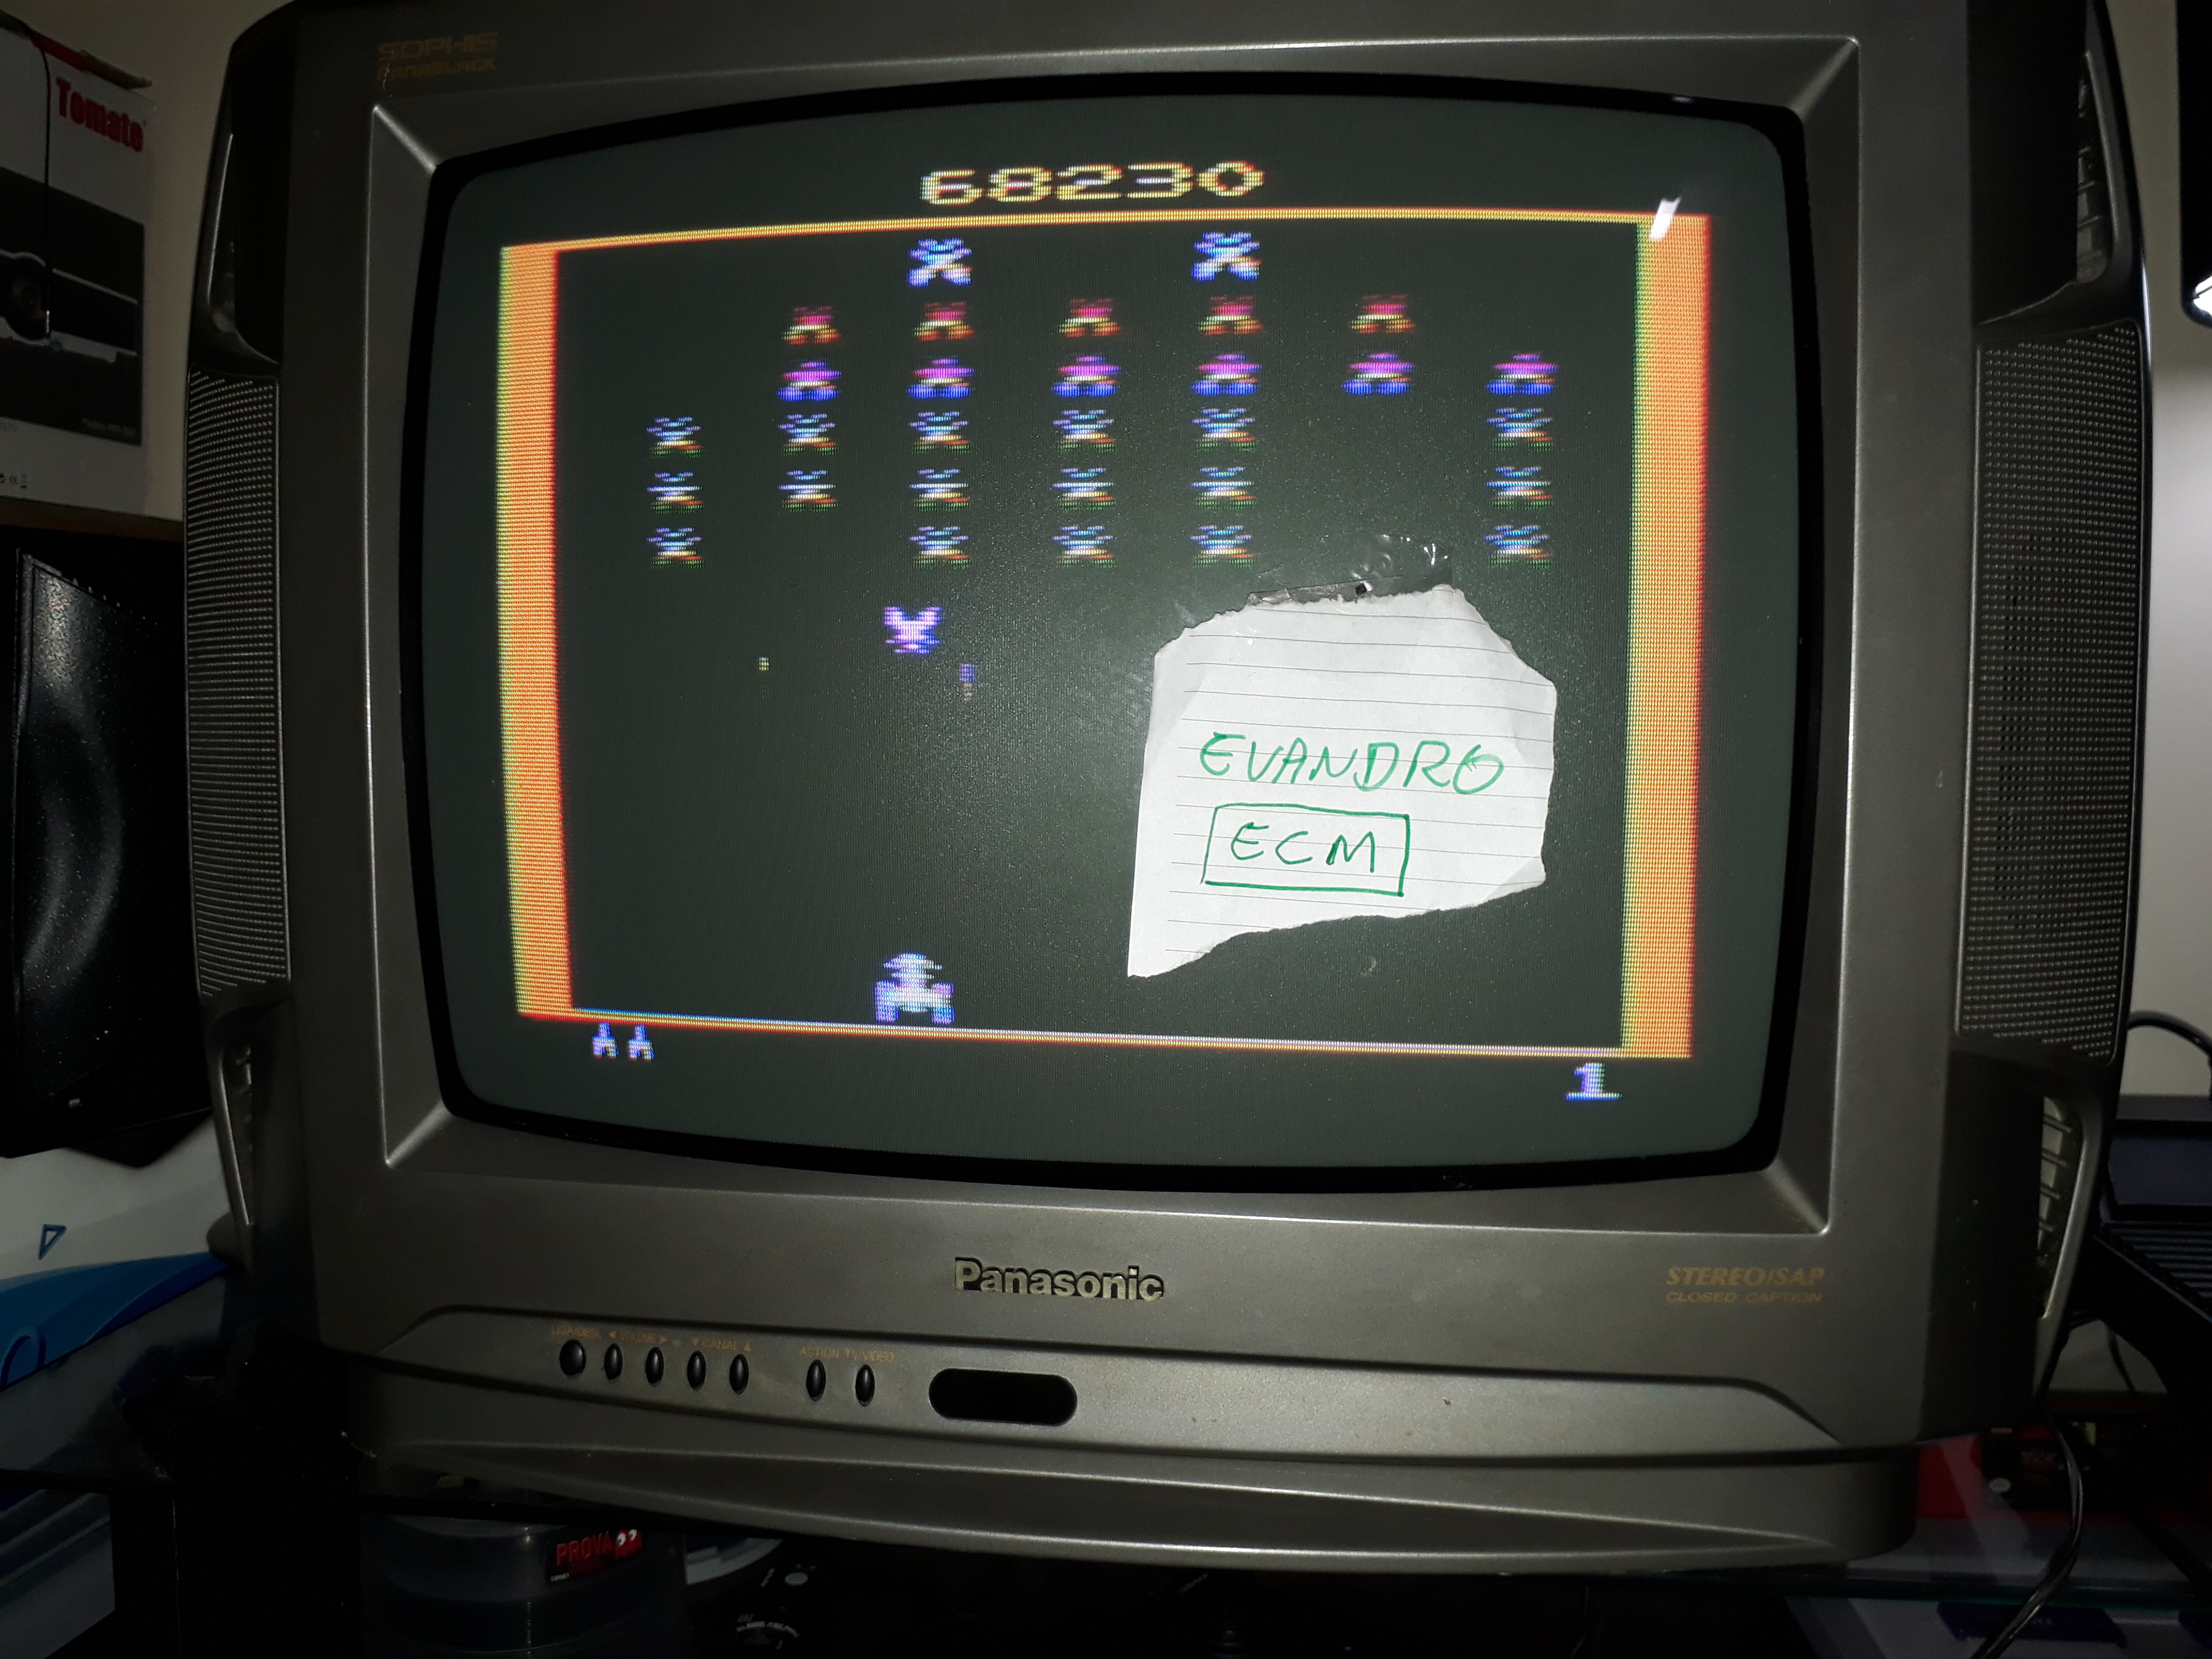 Evandro: Galaxian (Atari 2600 Expert/A) 68,230 points on 2018-11-01 19:01:31